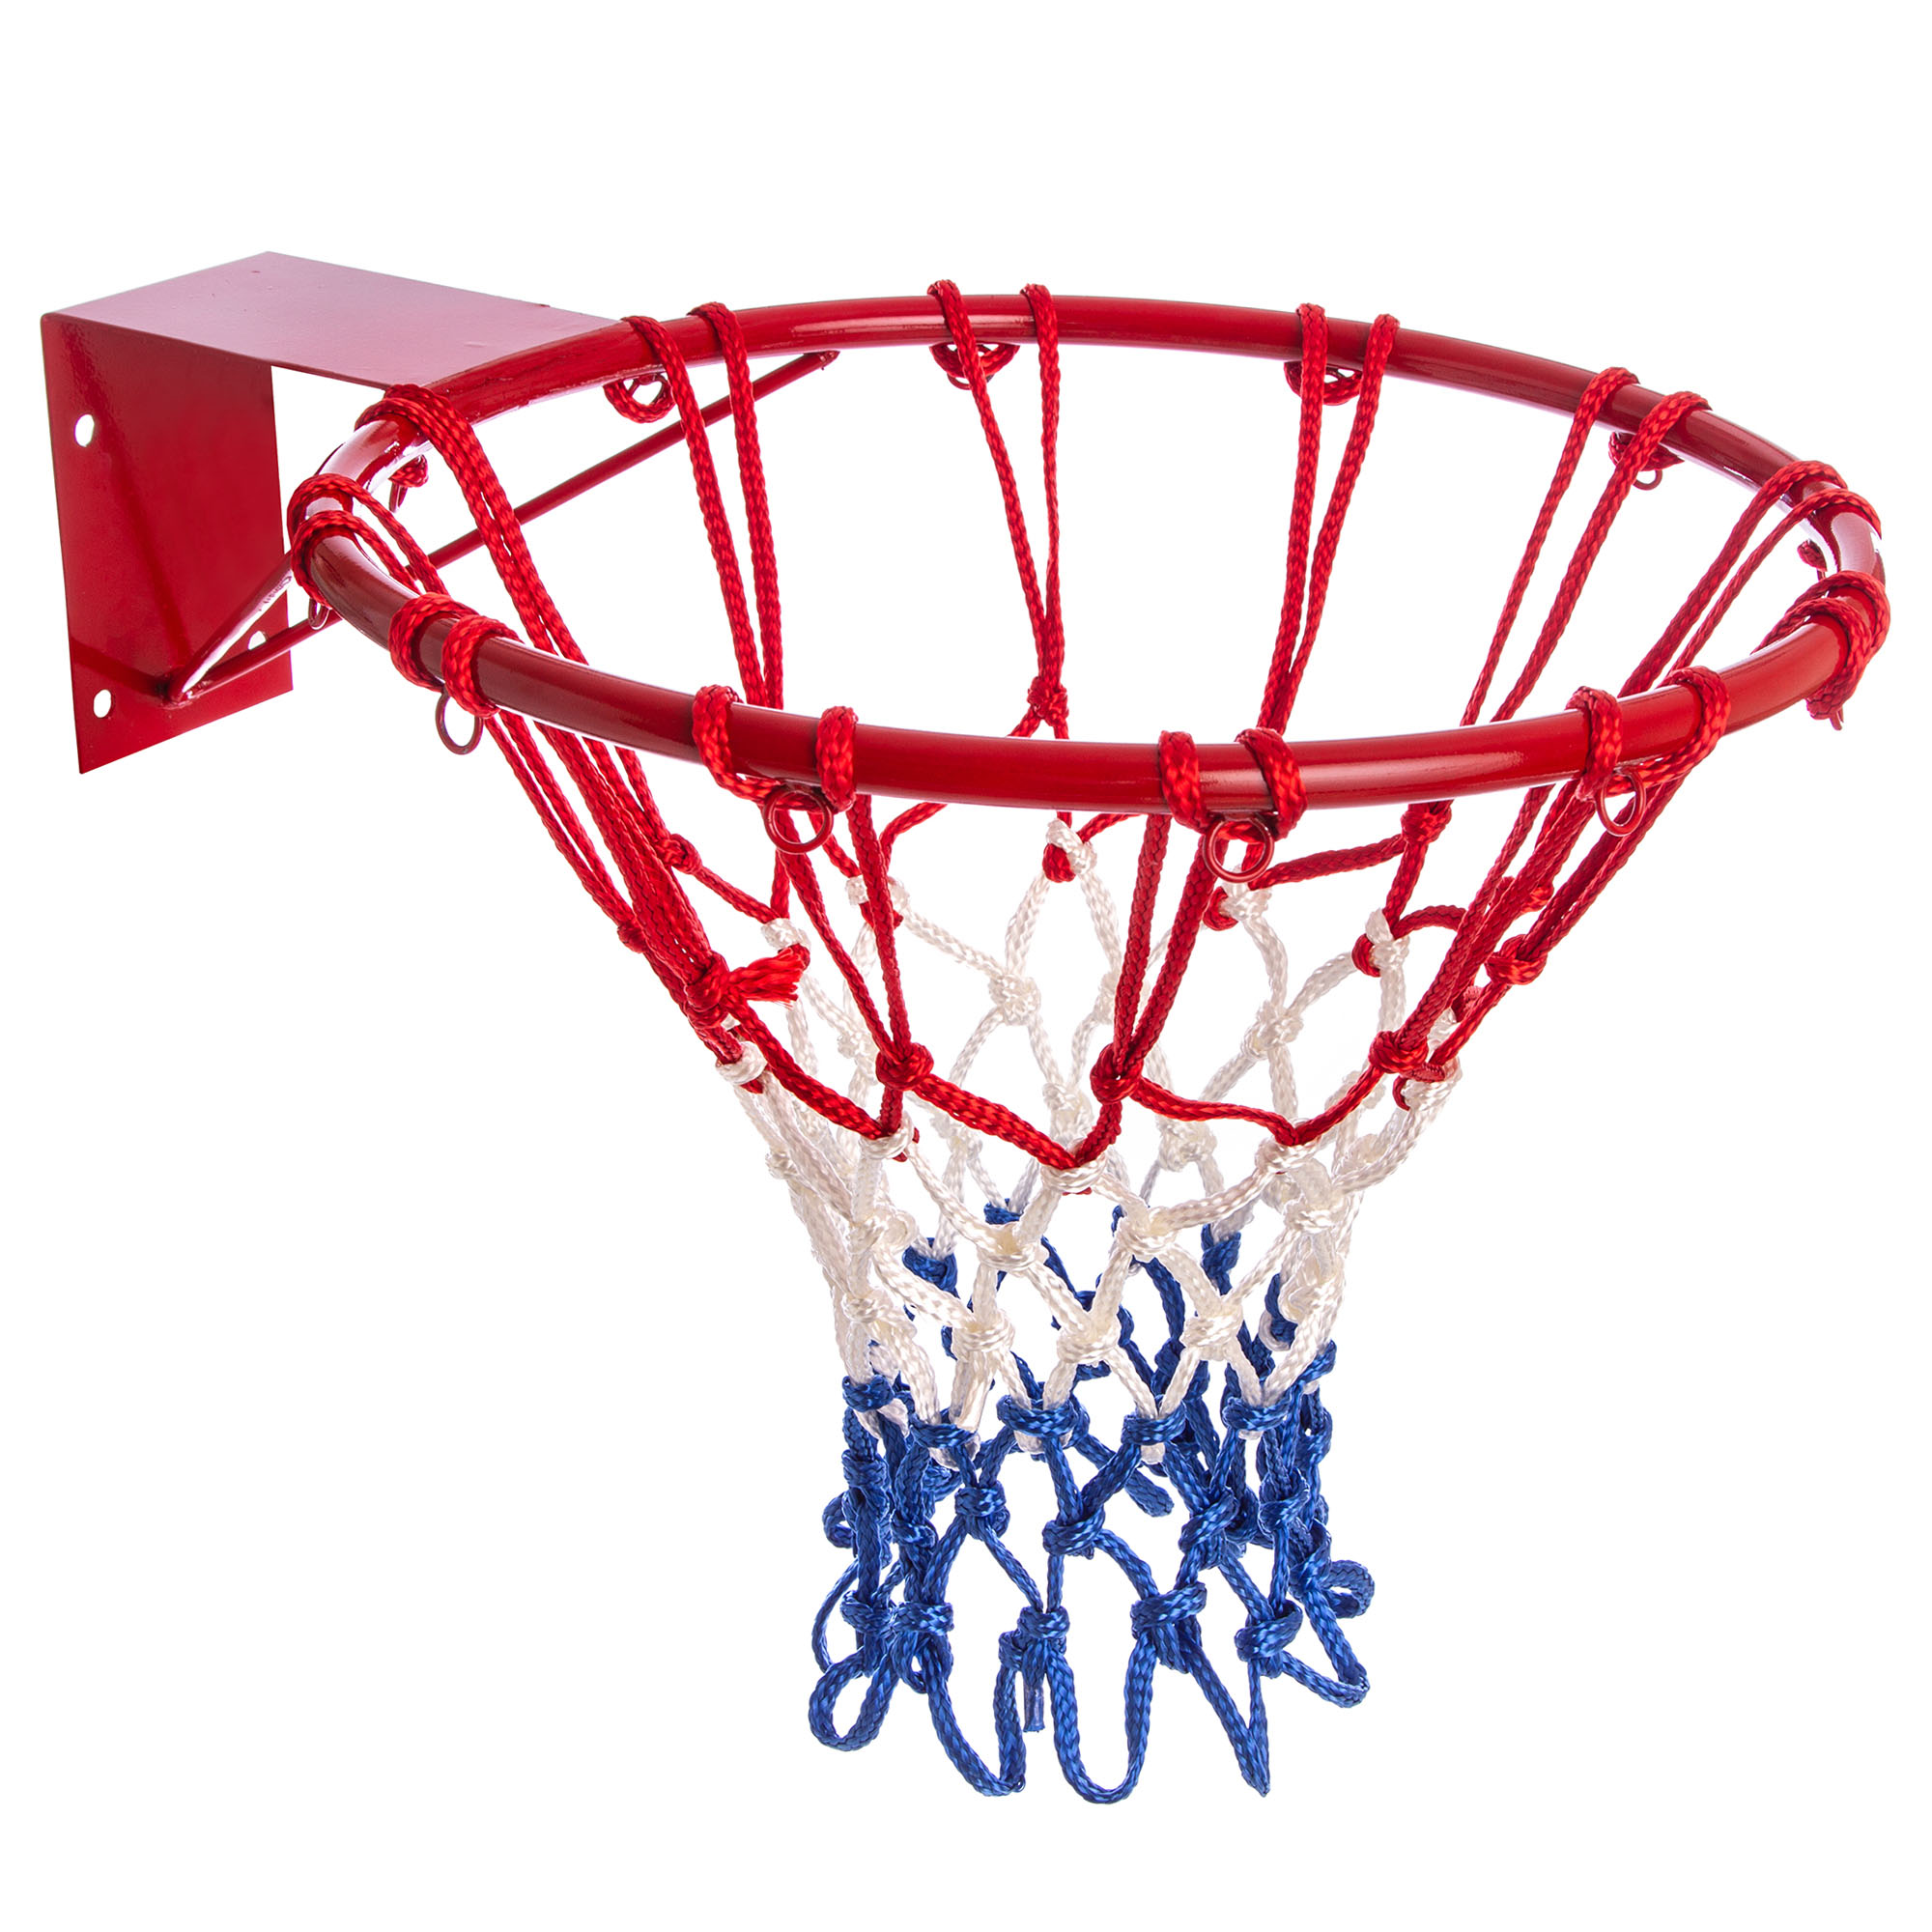 Баскетбольная сетка купить. Баскетбольная сетка. Сетка для баскетбола. Сетка для баскетбольного кольца. Сетка для баскетбольного кольца красная.